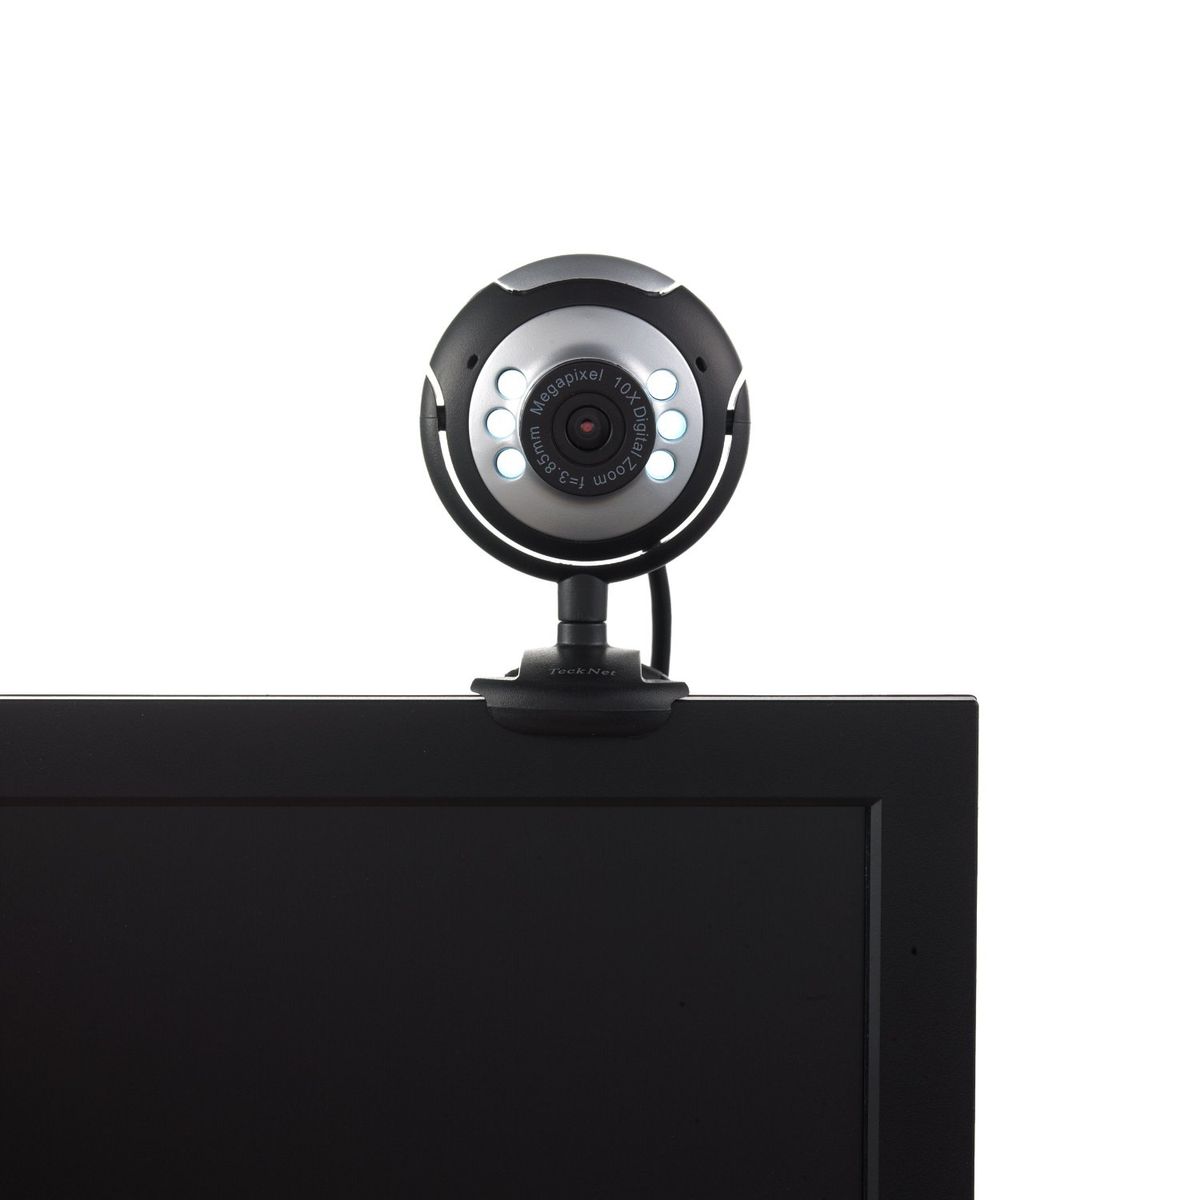 TeckNet® C016 USB HD 720P Webcam, 5 MegaPixel, 5G Lens, USB Microphone